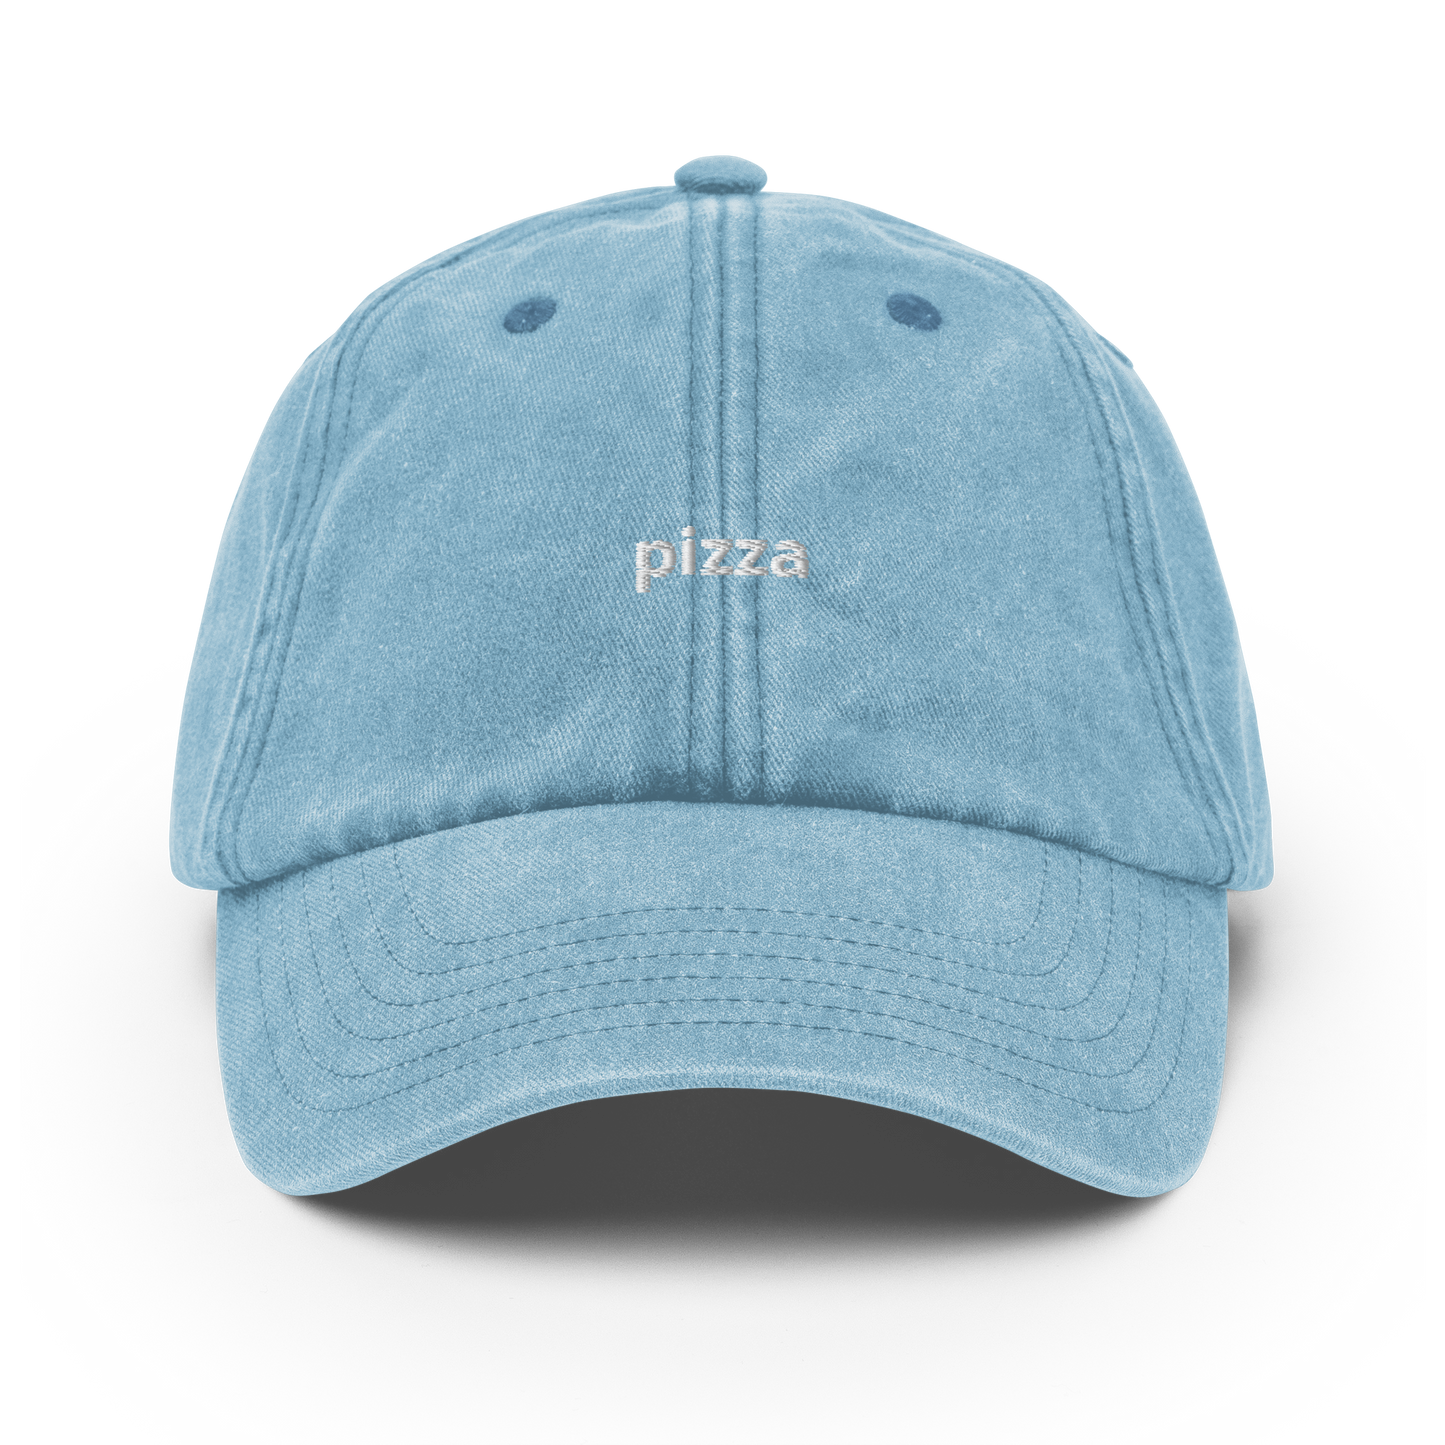 Pizza - Vintage Hat